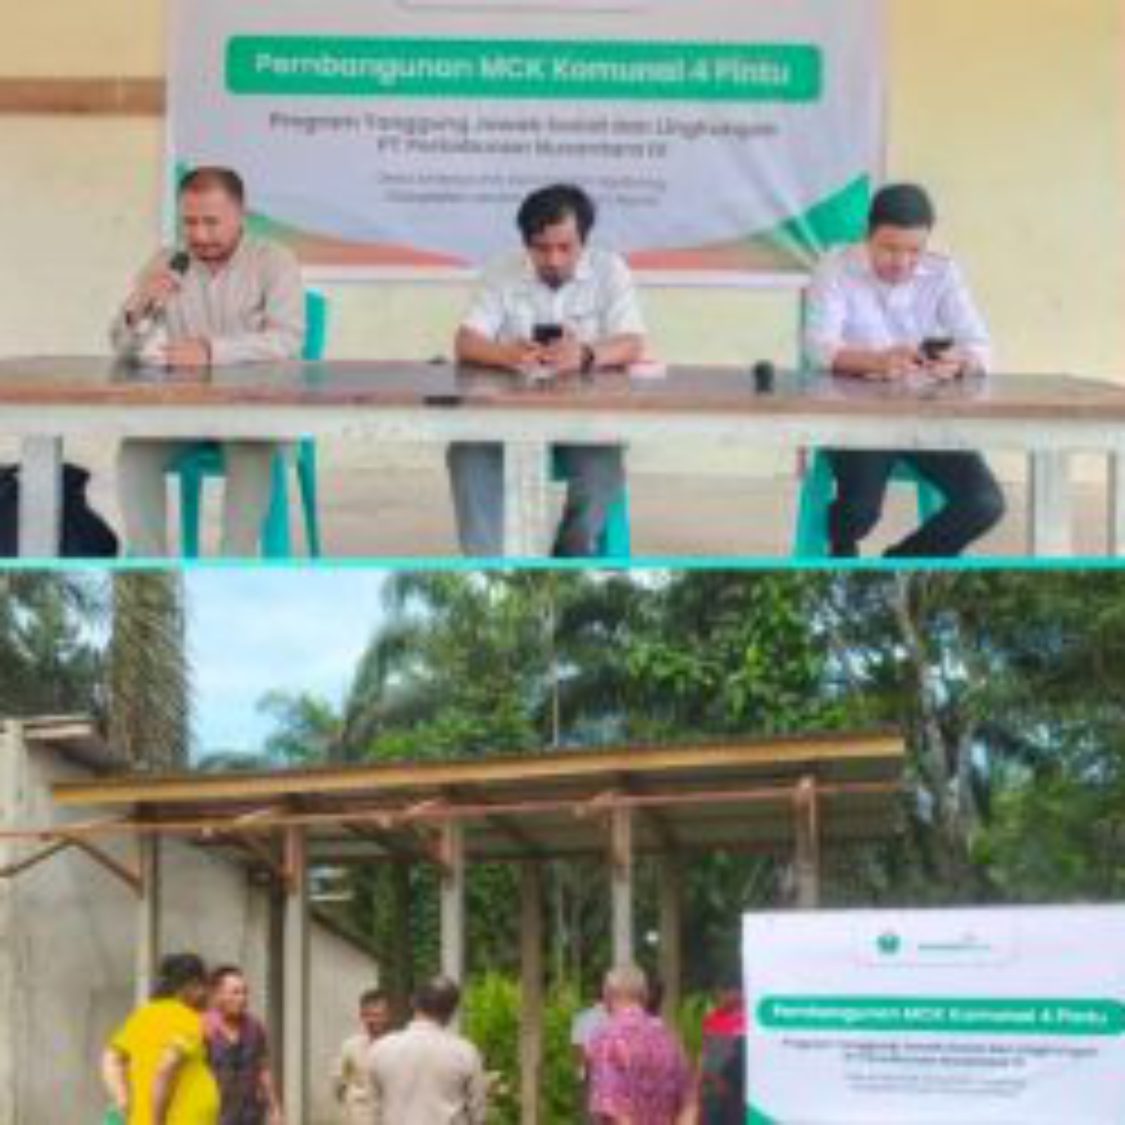 Desa Amboyo Inti Ngabang Terima Bantuan Pendirian Fasilitas MCK Komunal 4 Pintu dari PTPN IV Regional V